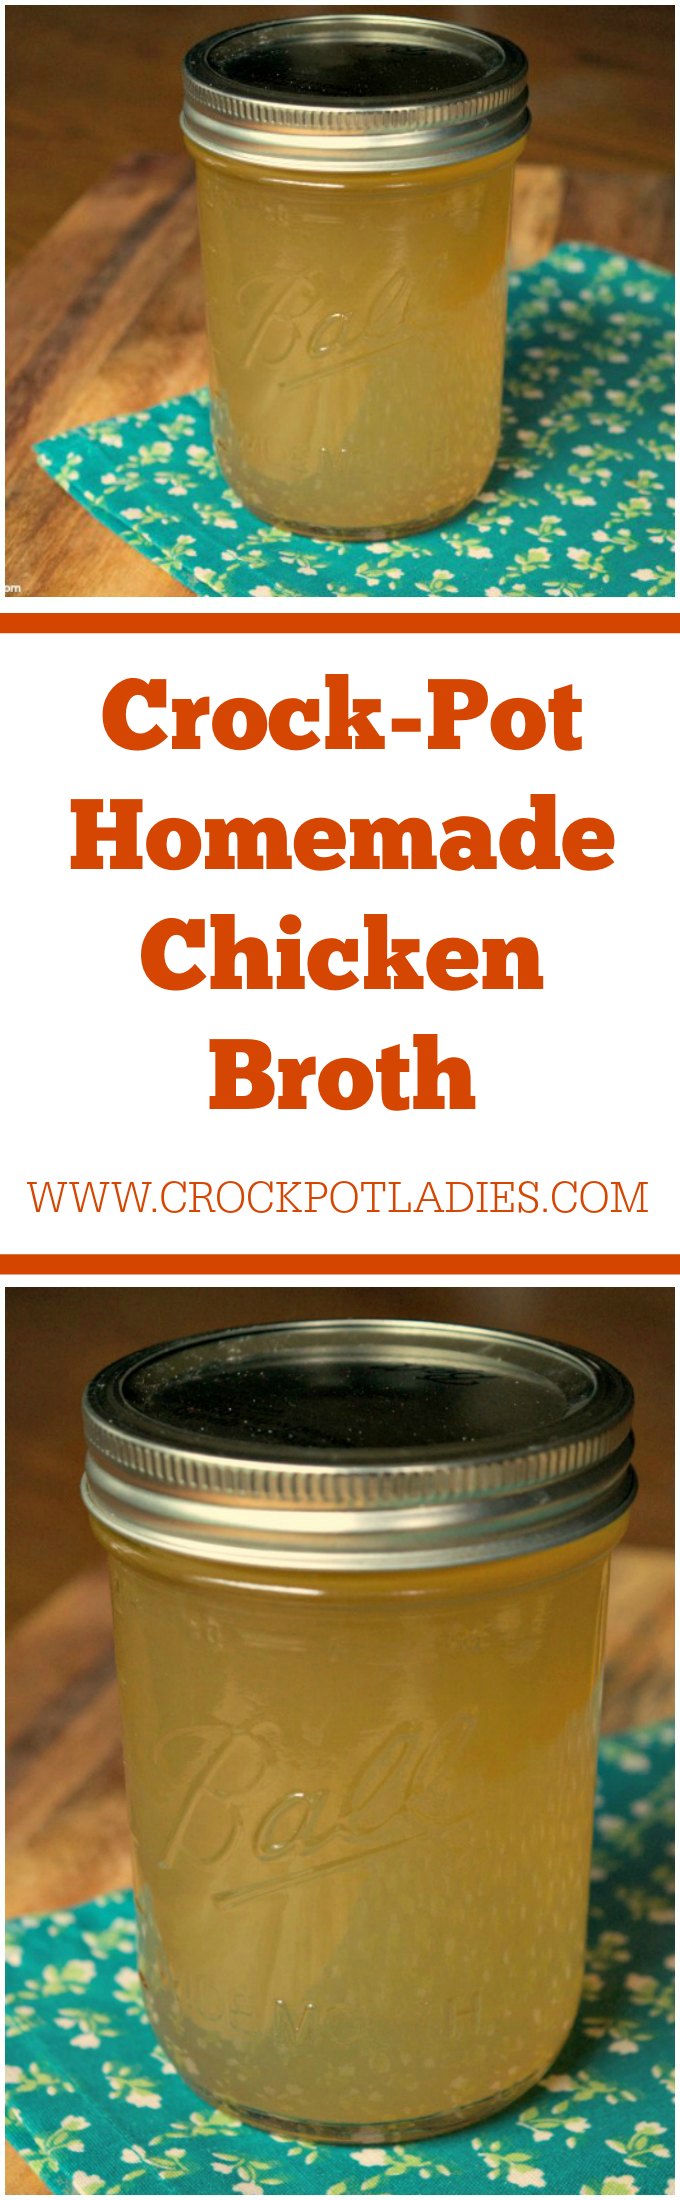 Crock-Pot Homemade Chicken Broth